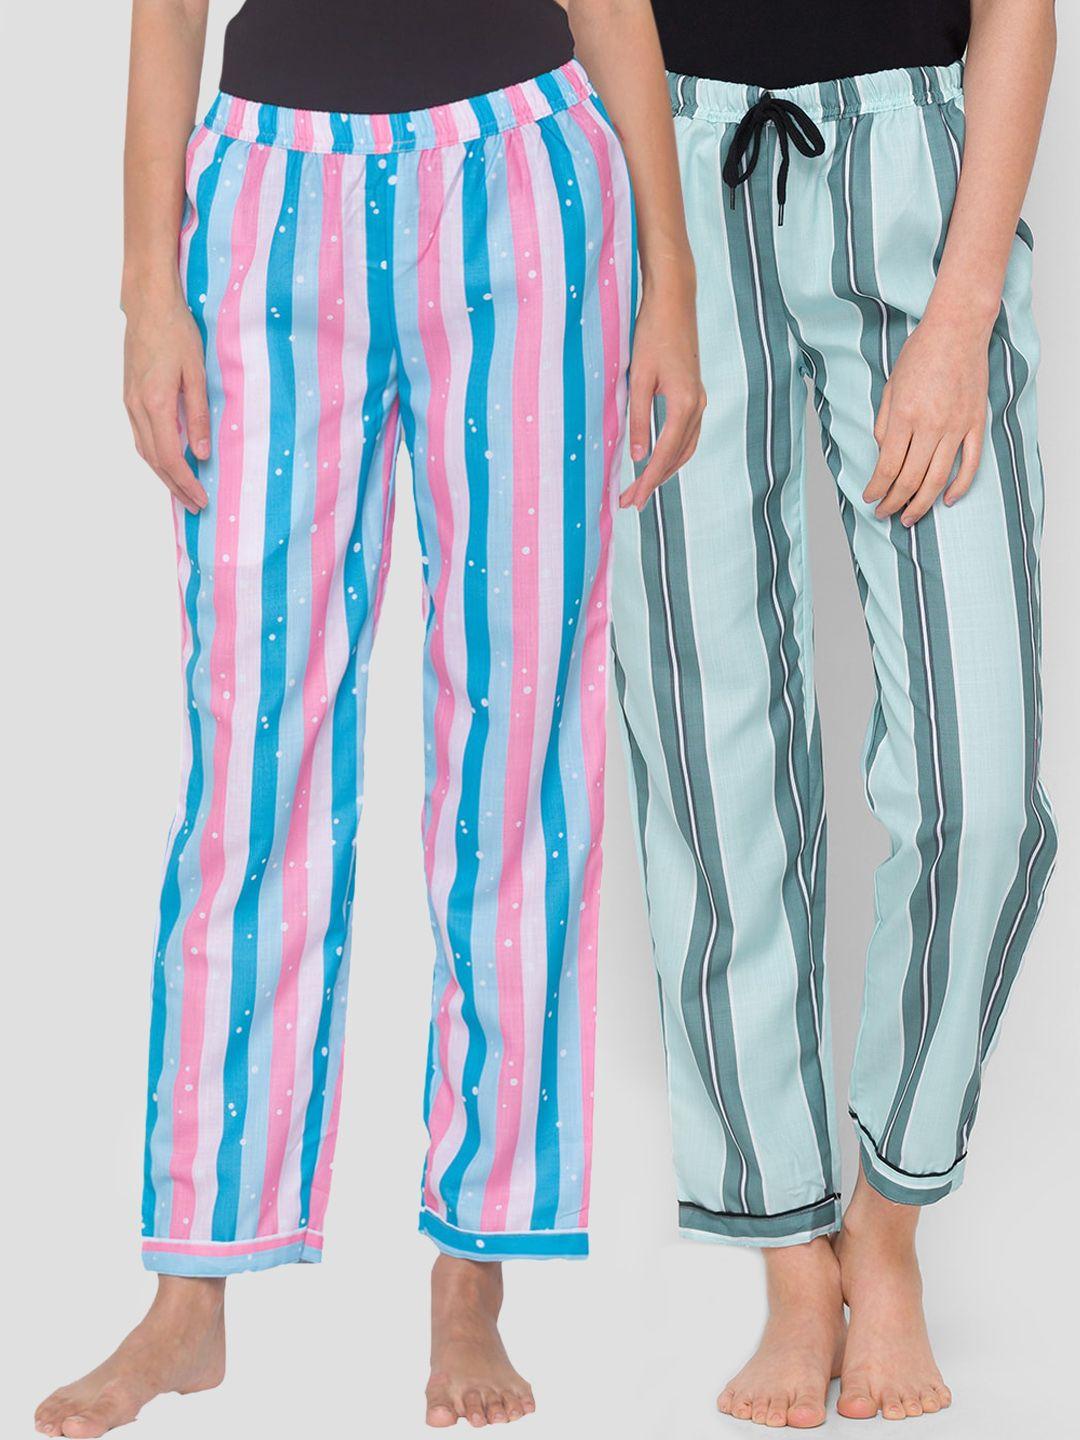 fashionrack women pack of 2 striped cotton lounge pants